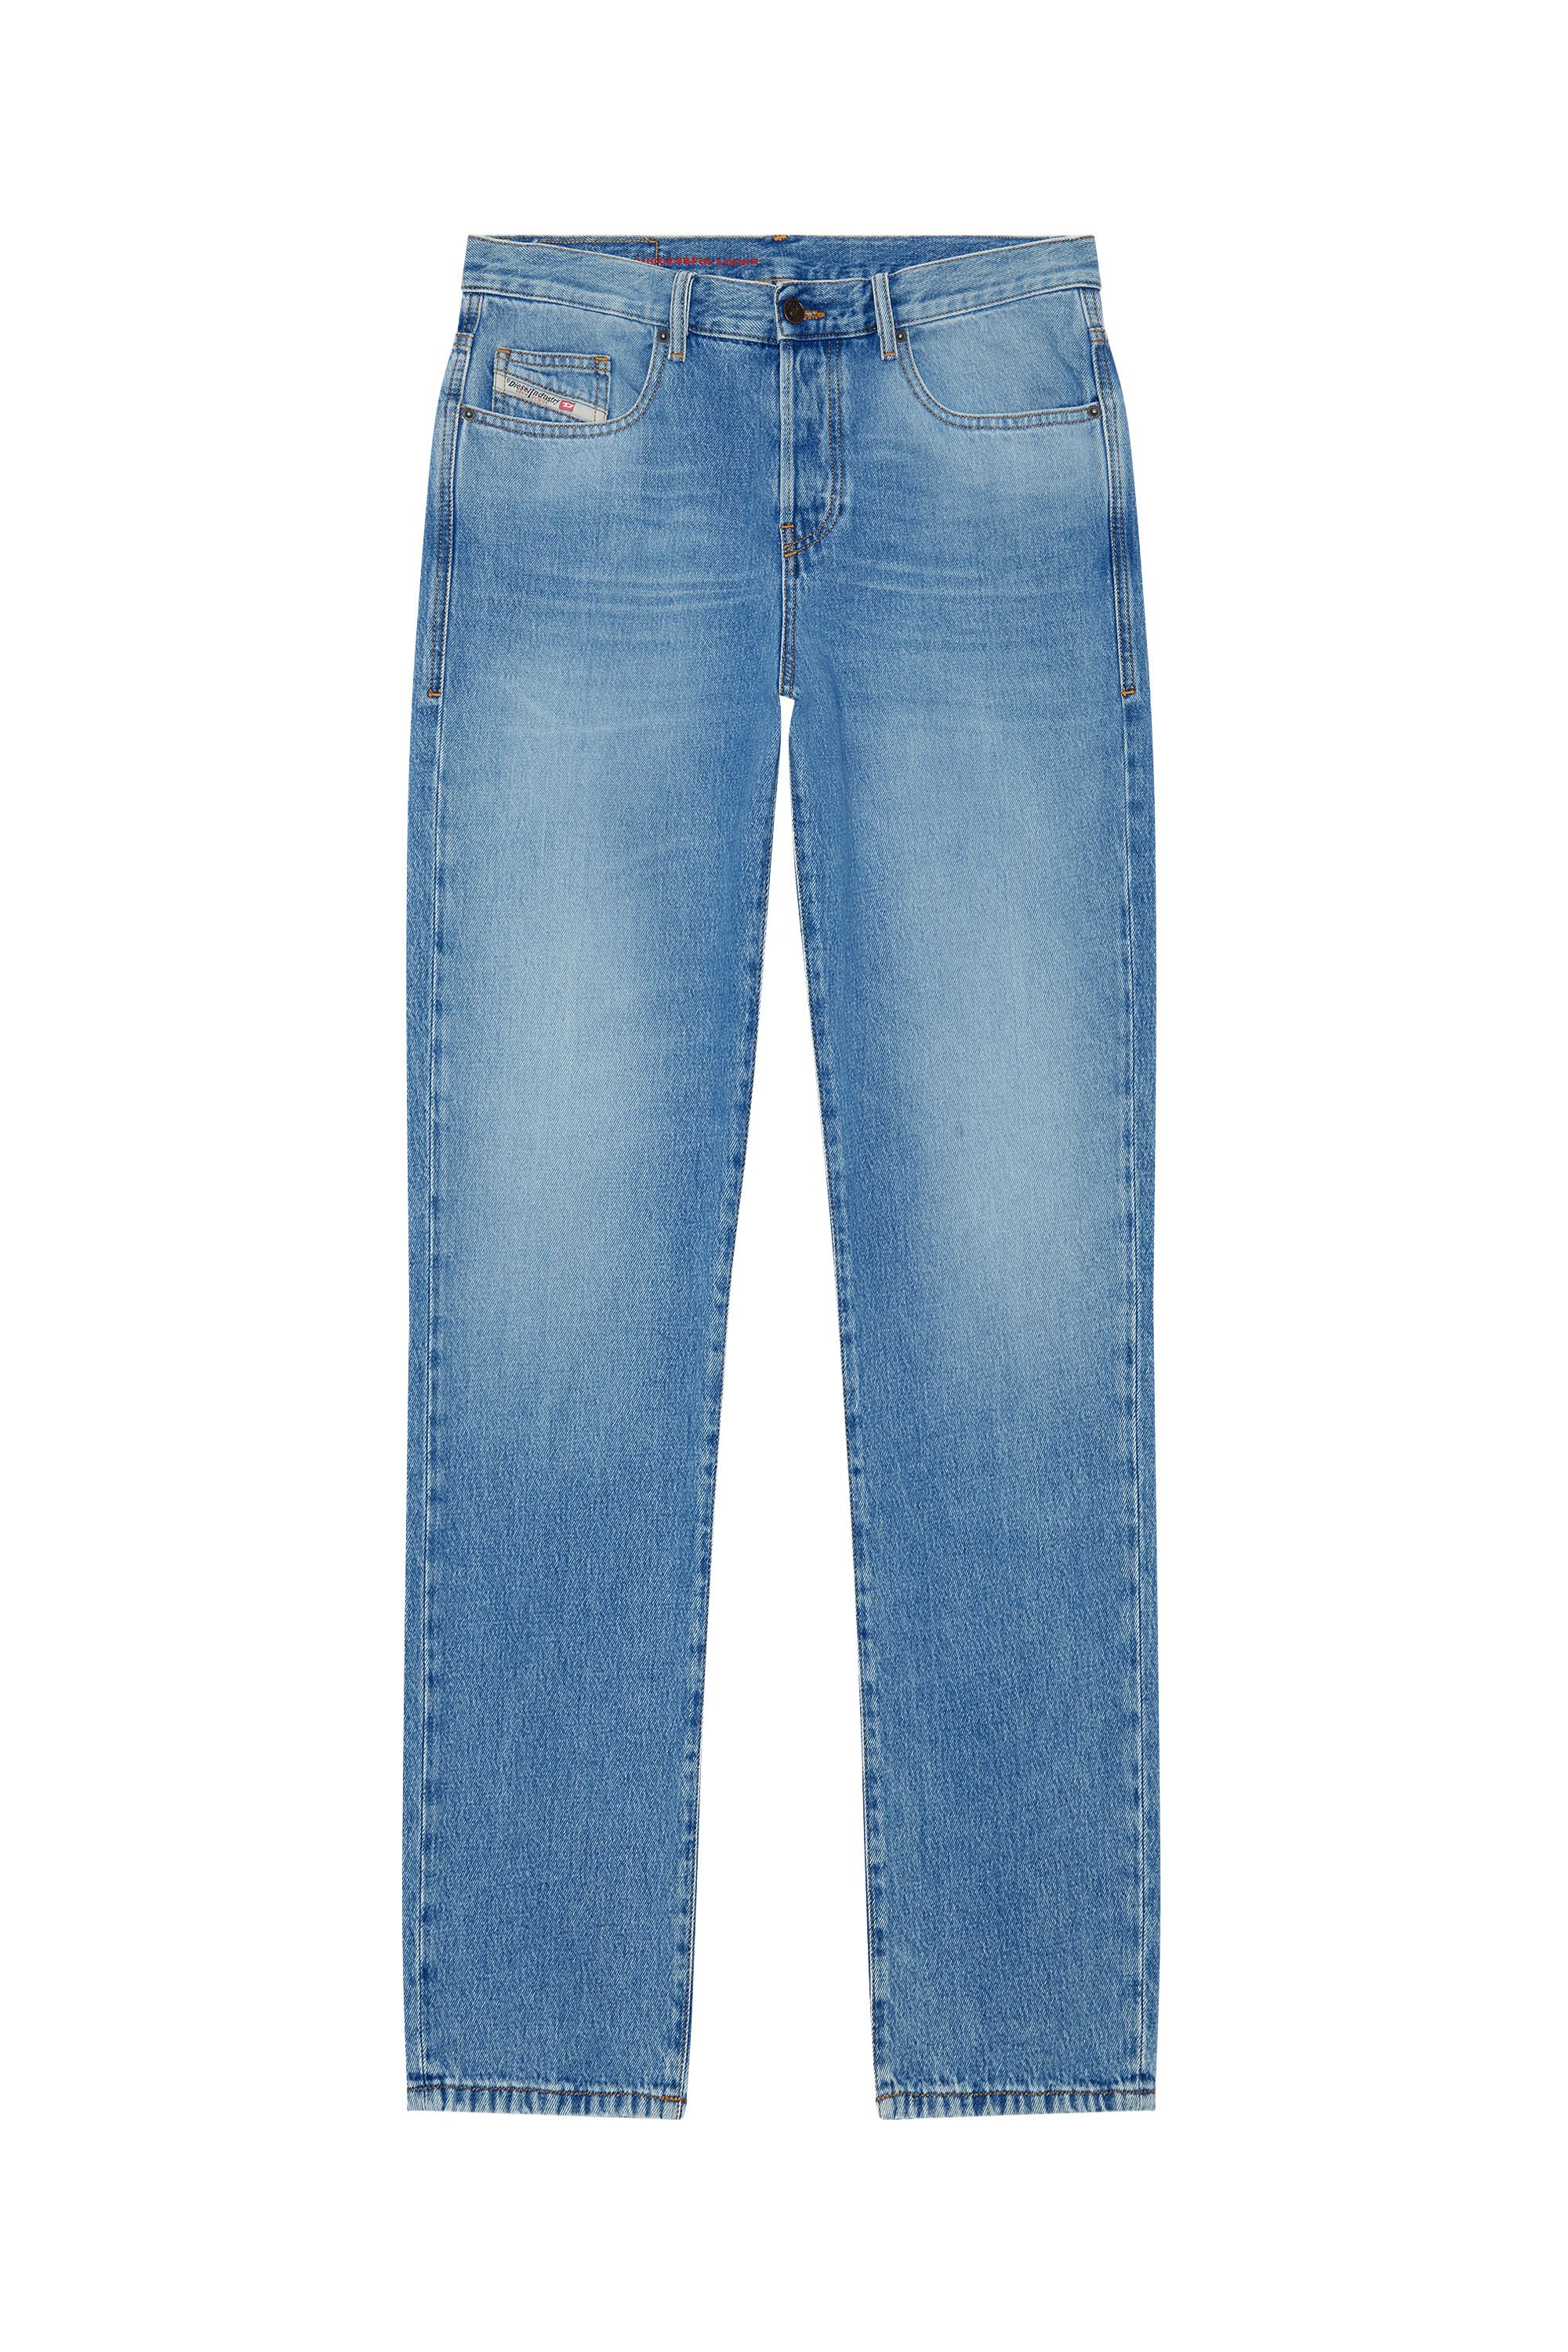 2020 D-Viker 09C15 Straight Jeans, Light Blue - Jeans